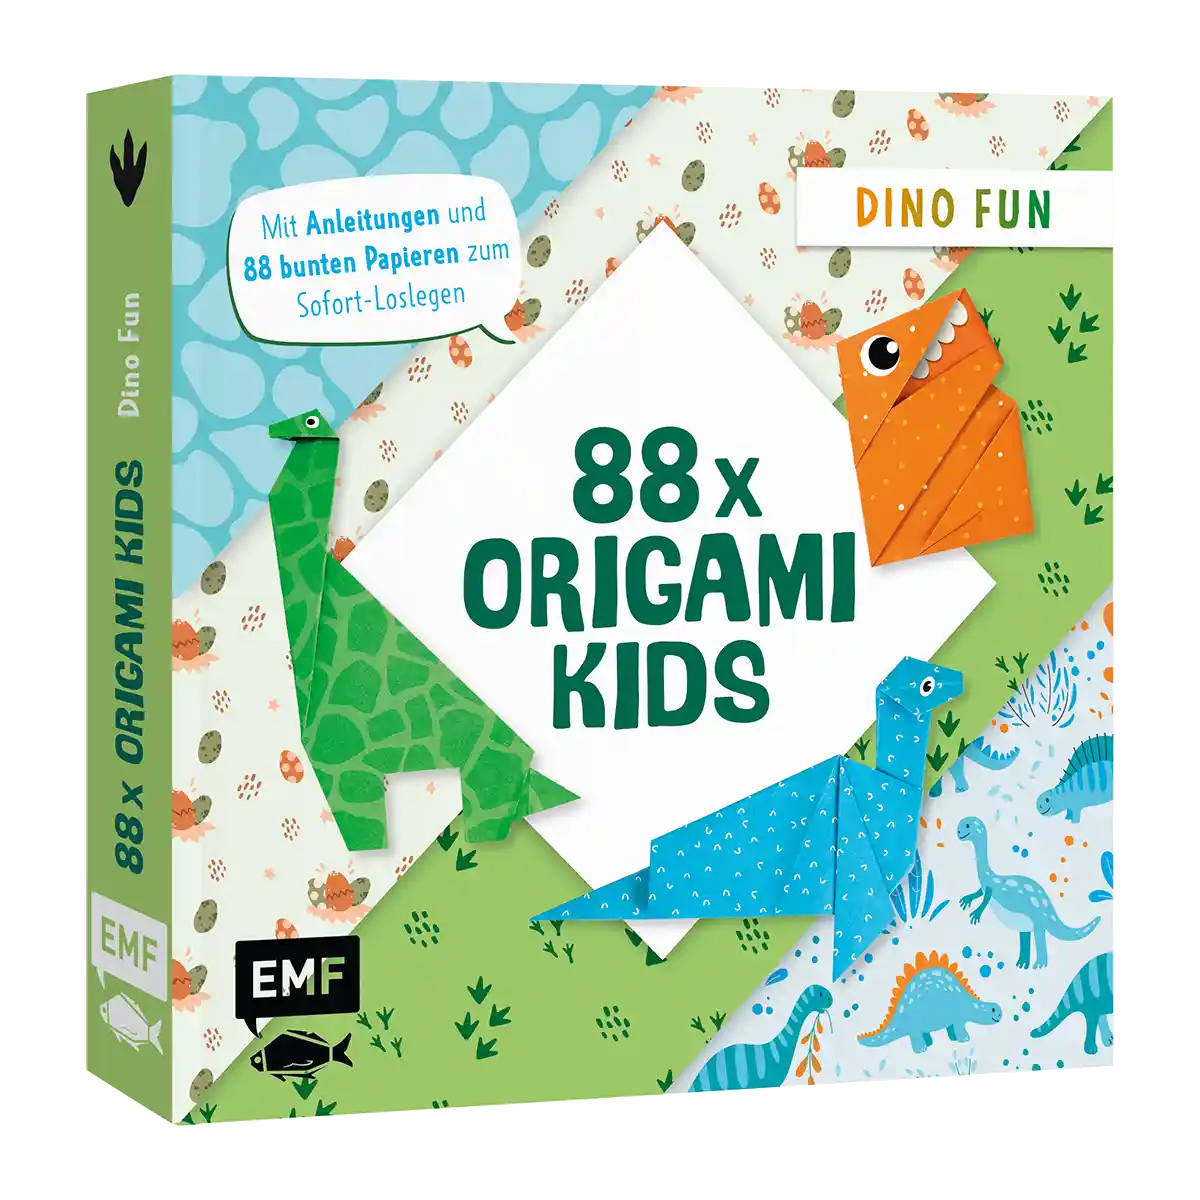 EMF / 88 Origami Kids / Dino Fun